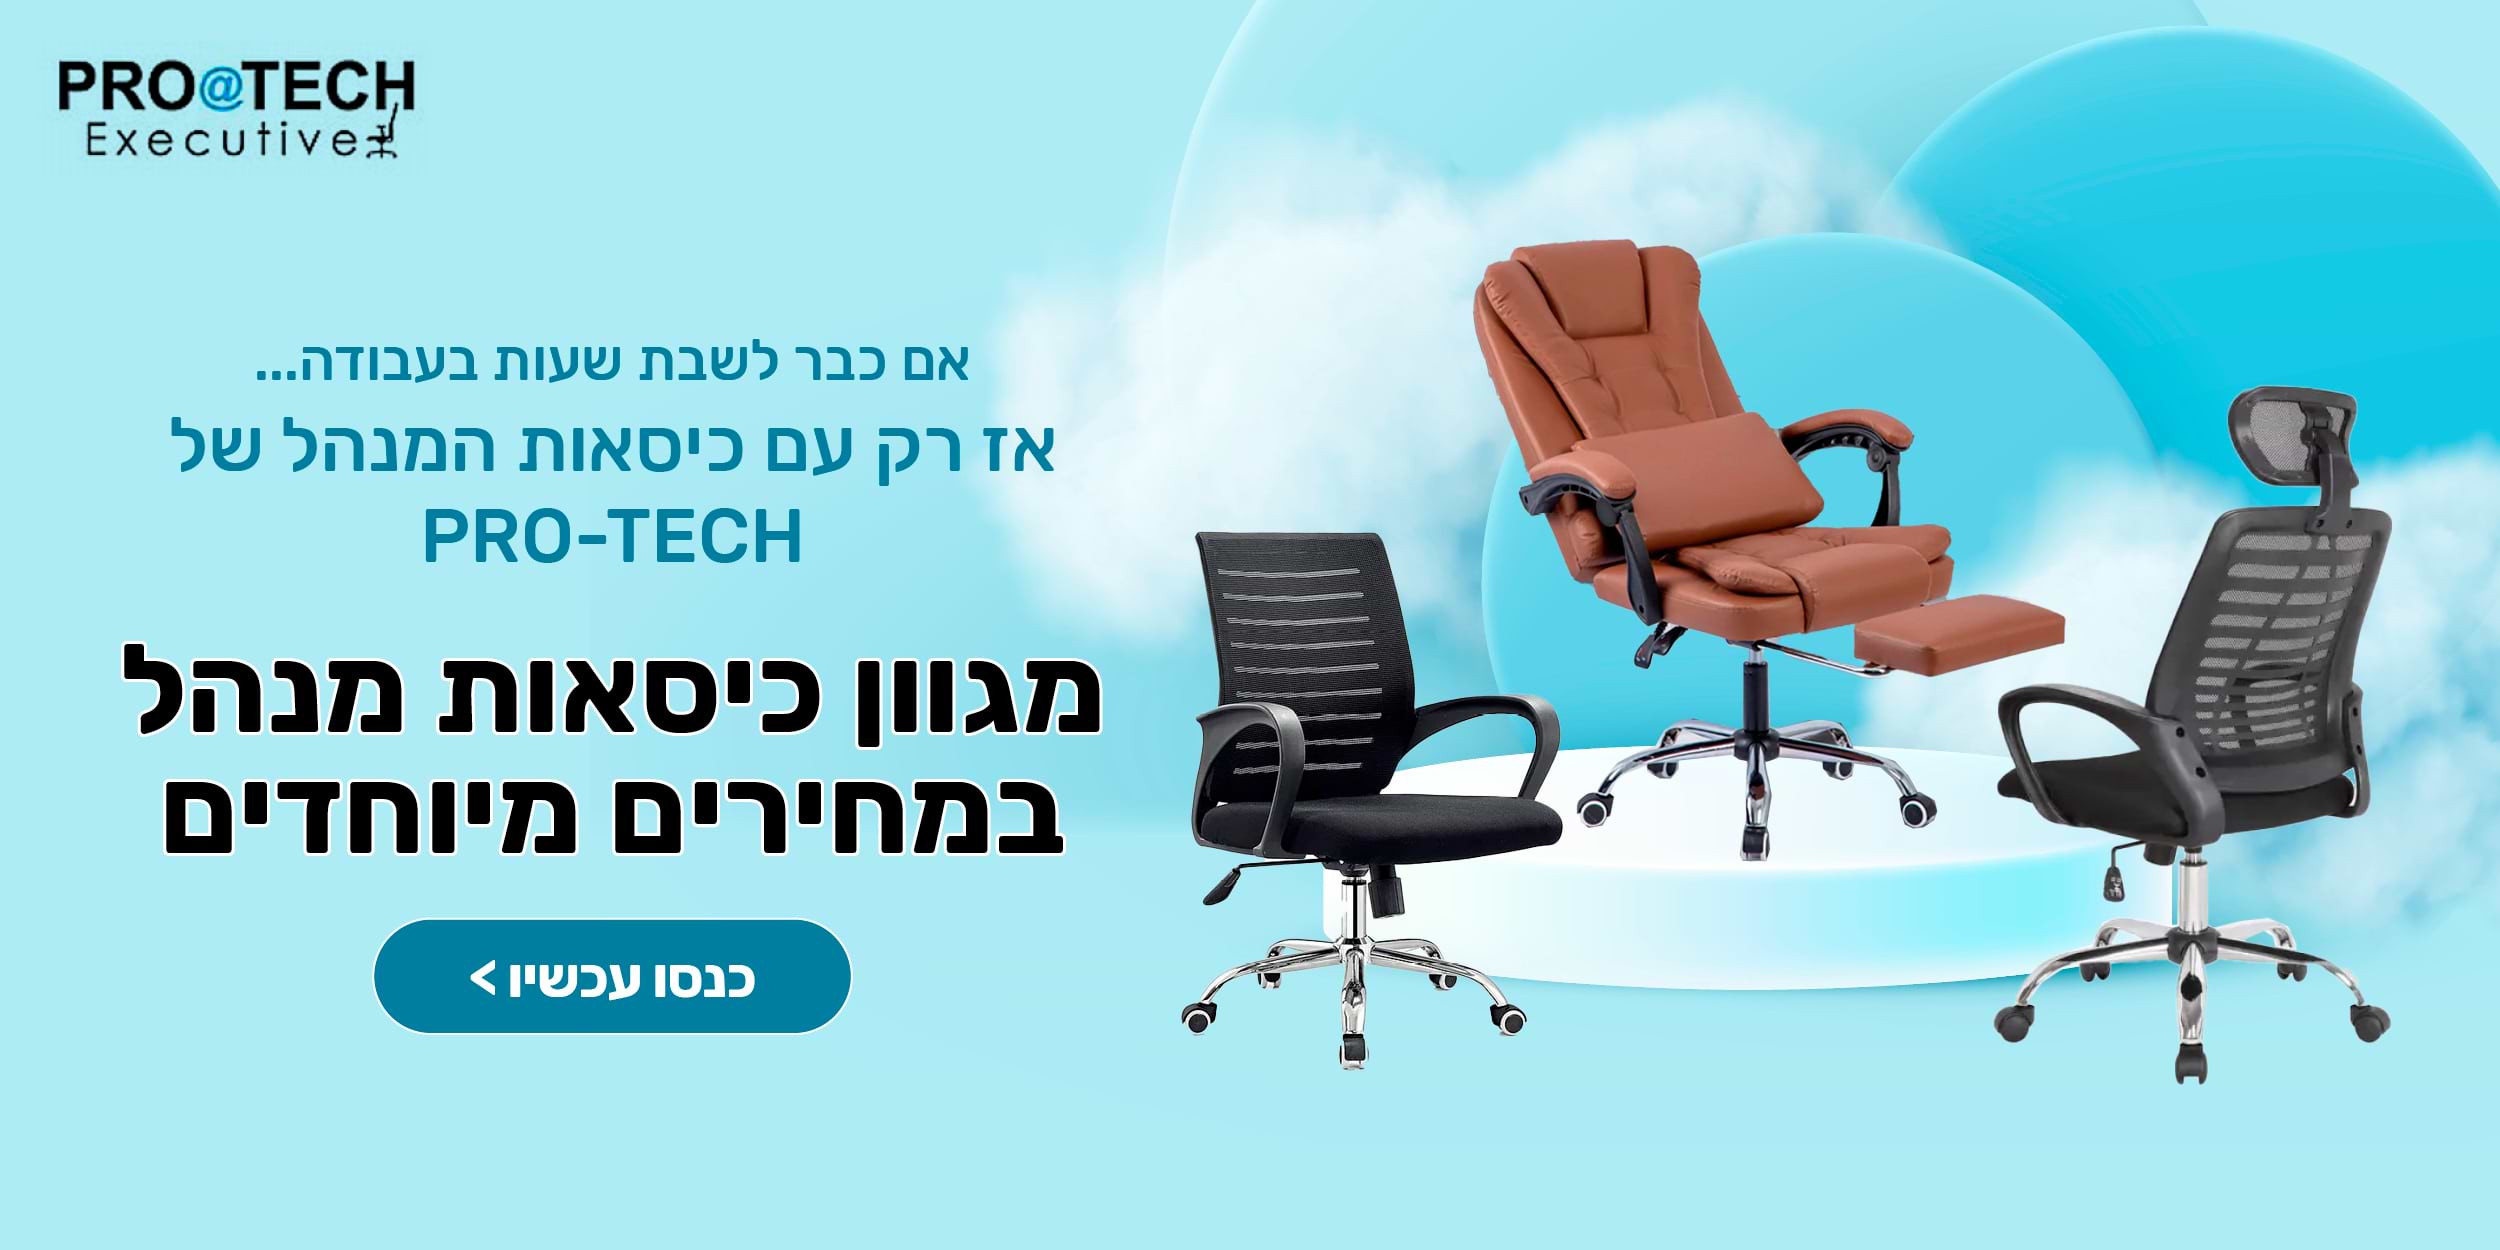 Protech Executive אם כבר לשבת שעות בעבודה... .אז רק עם כיסאות המנהל של Pro-Tech מגוון כיסאות מנהל במחירים מיוחדים